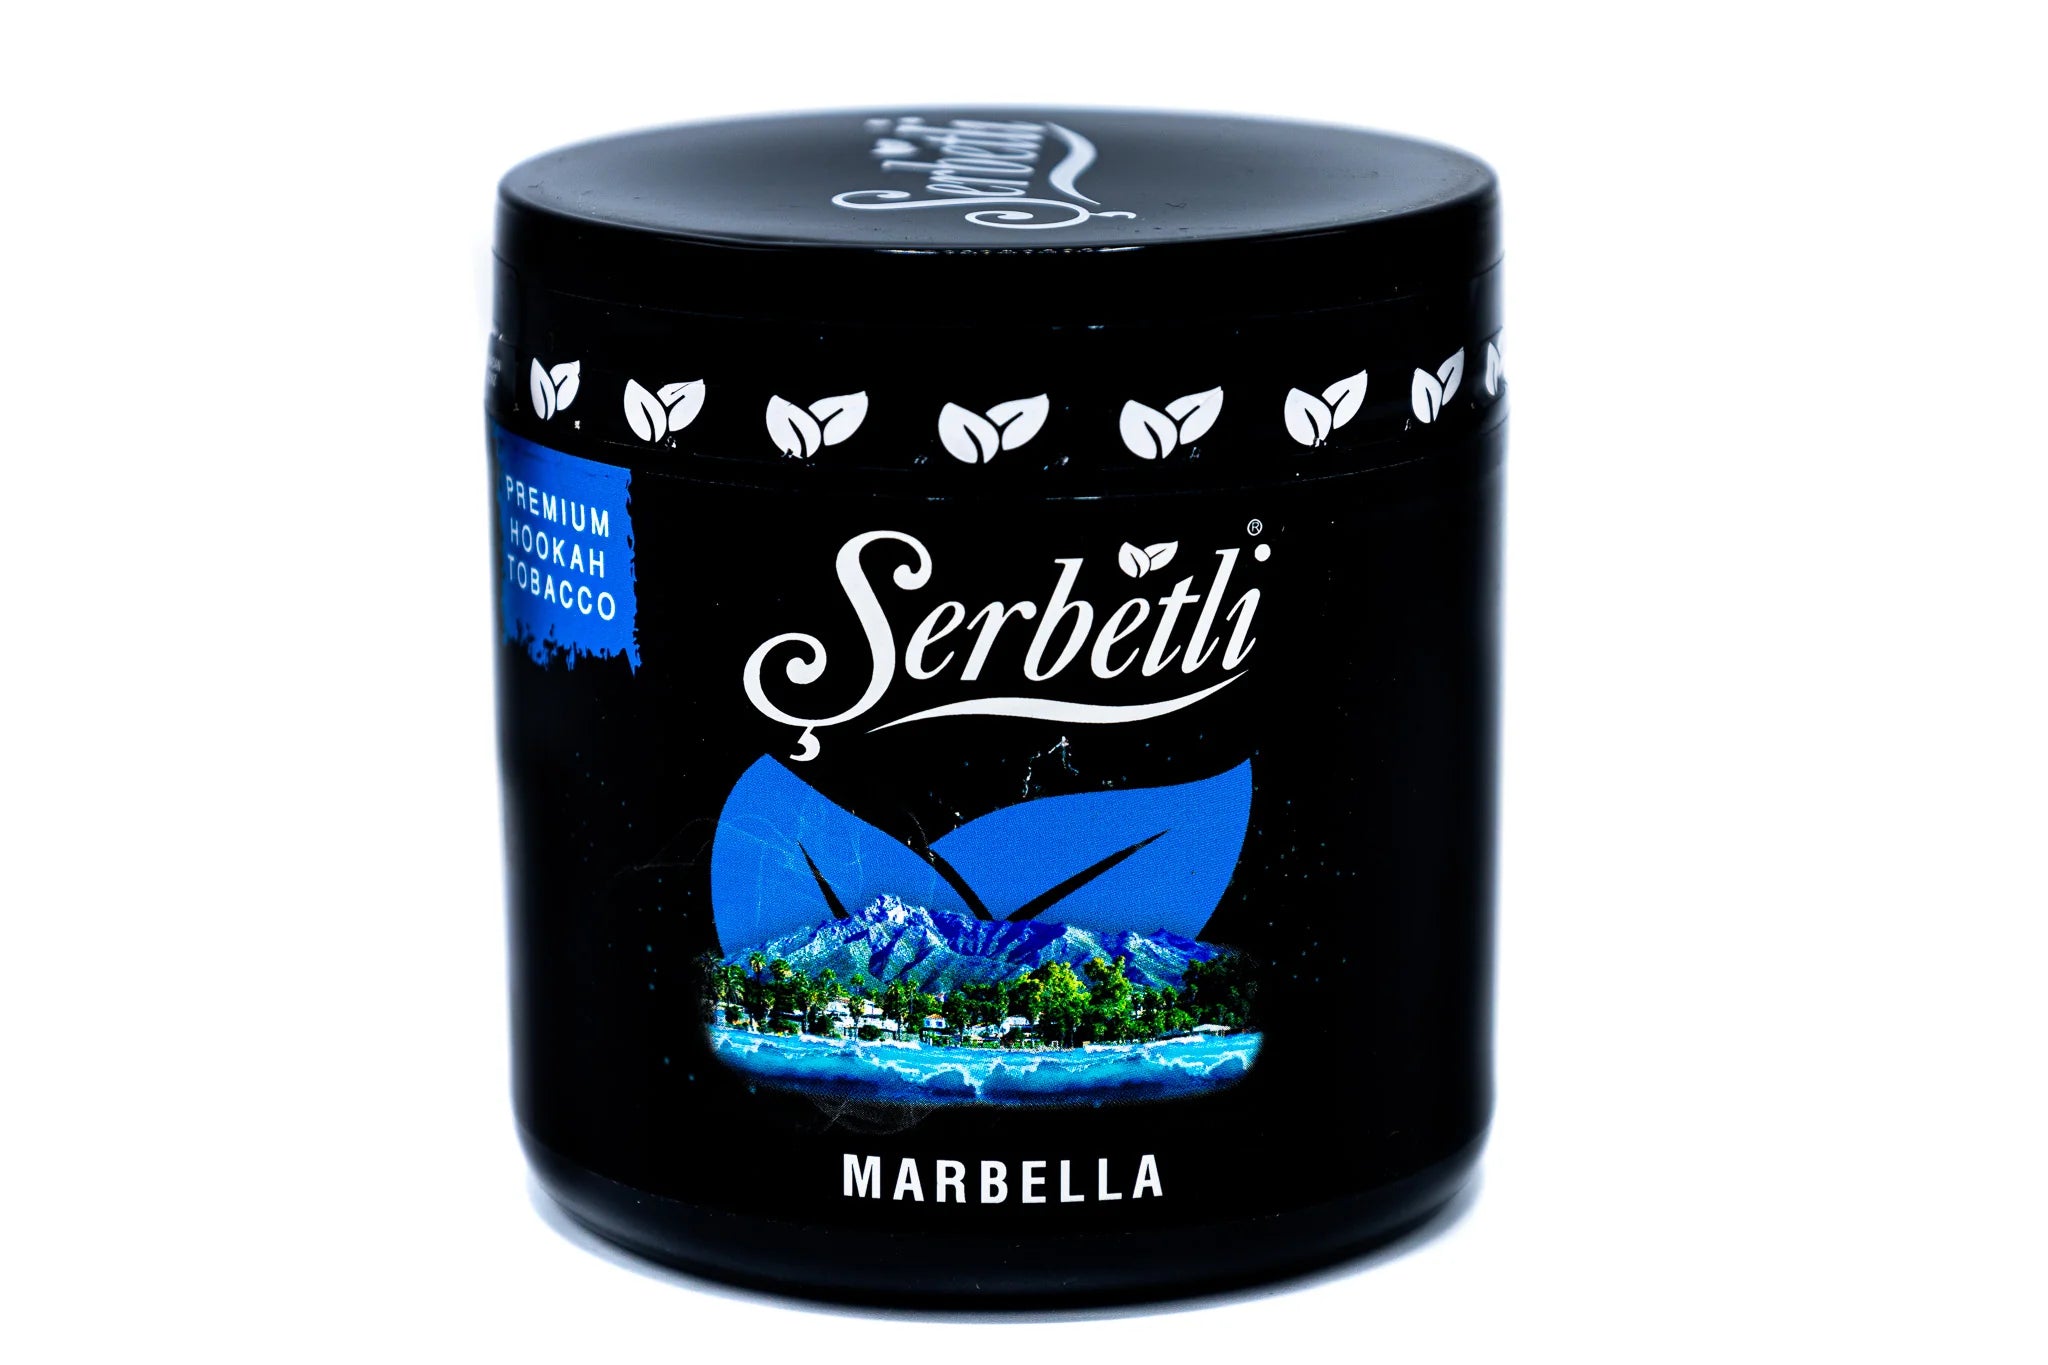 Serbetli shisha tobacco Marbella